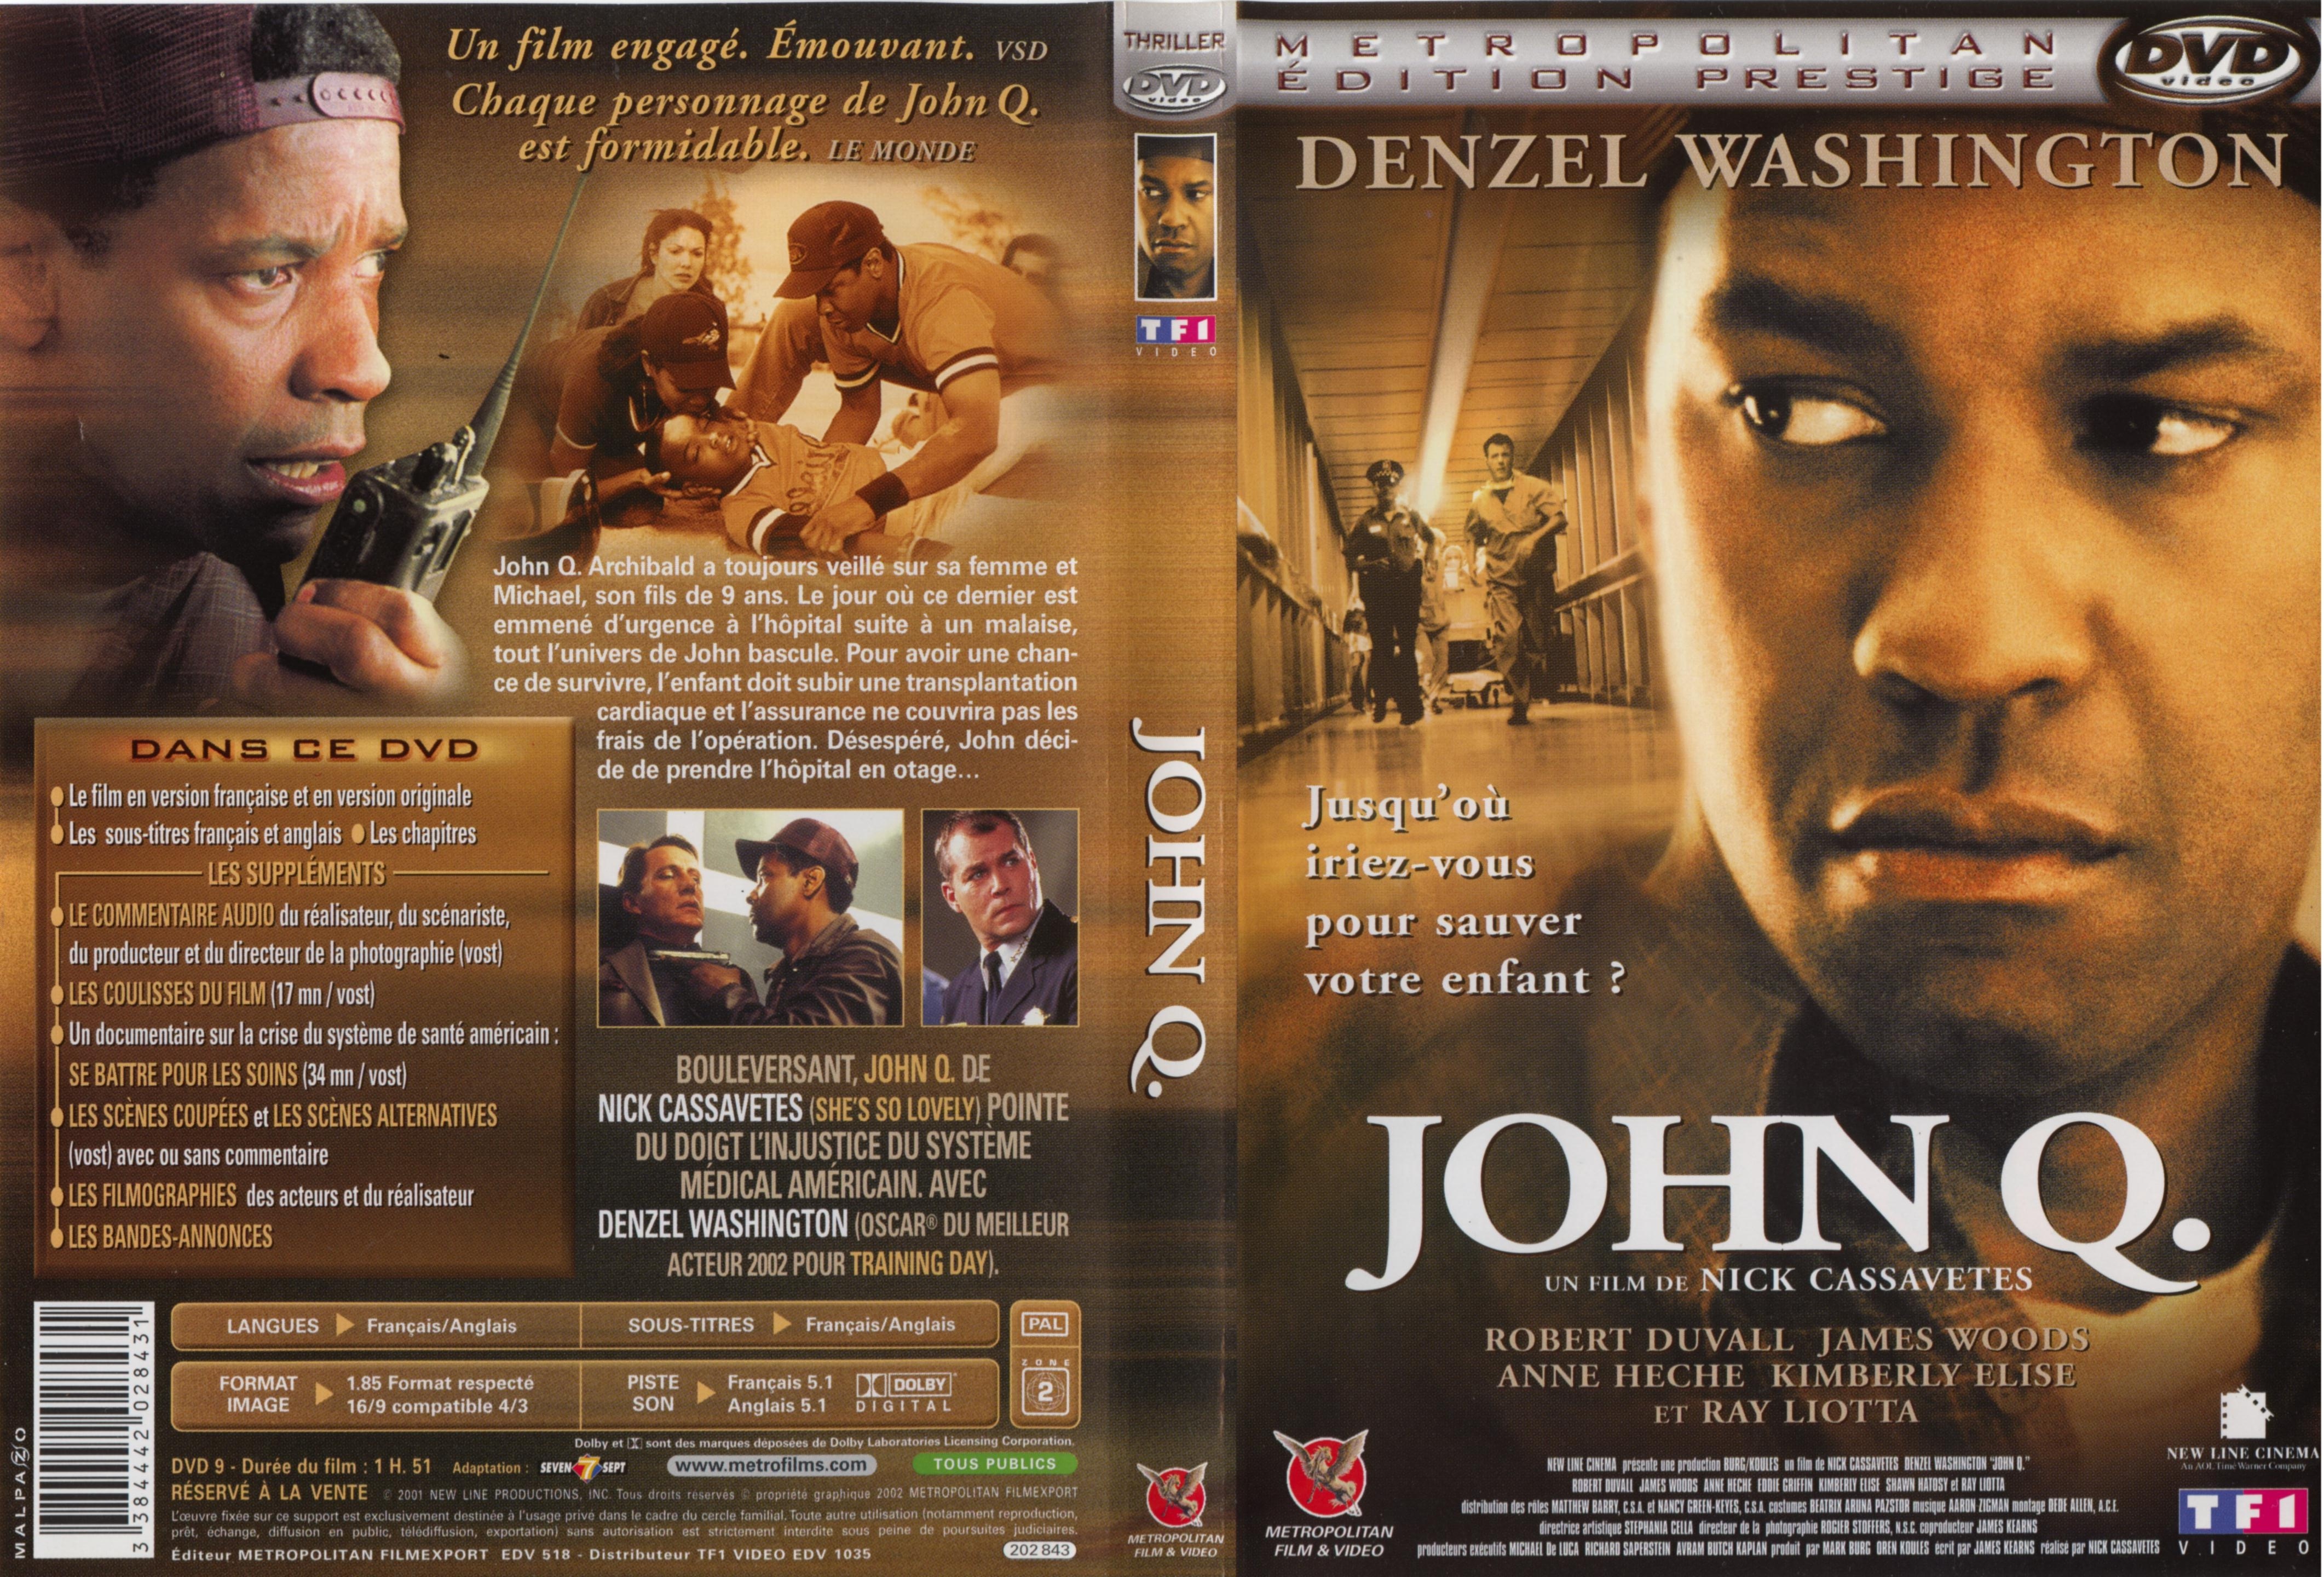 Jaquette DVD John Q